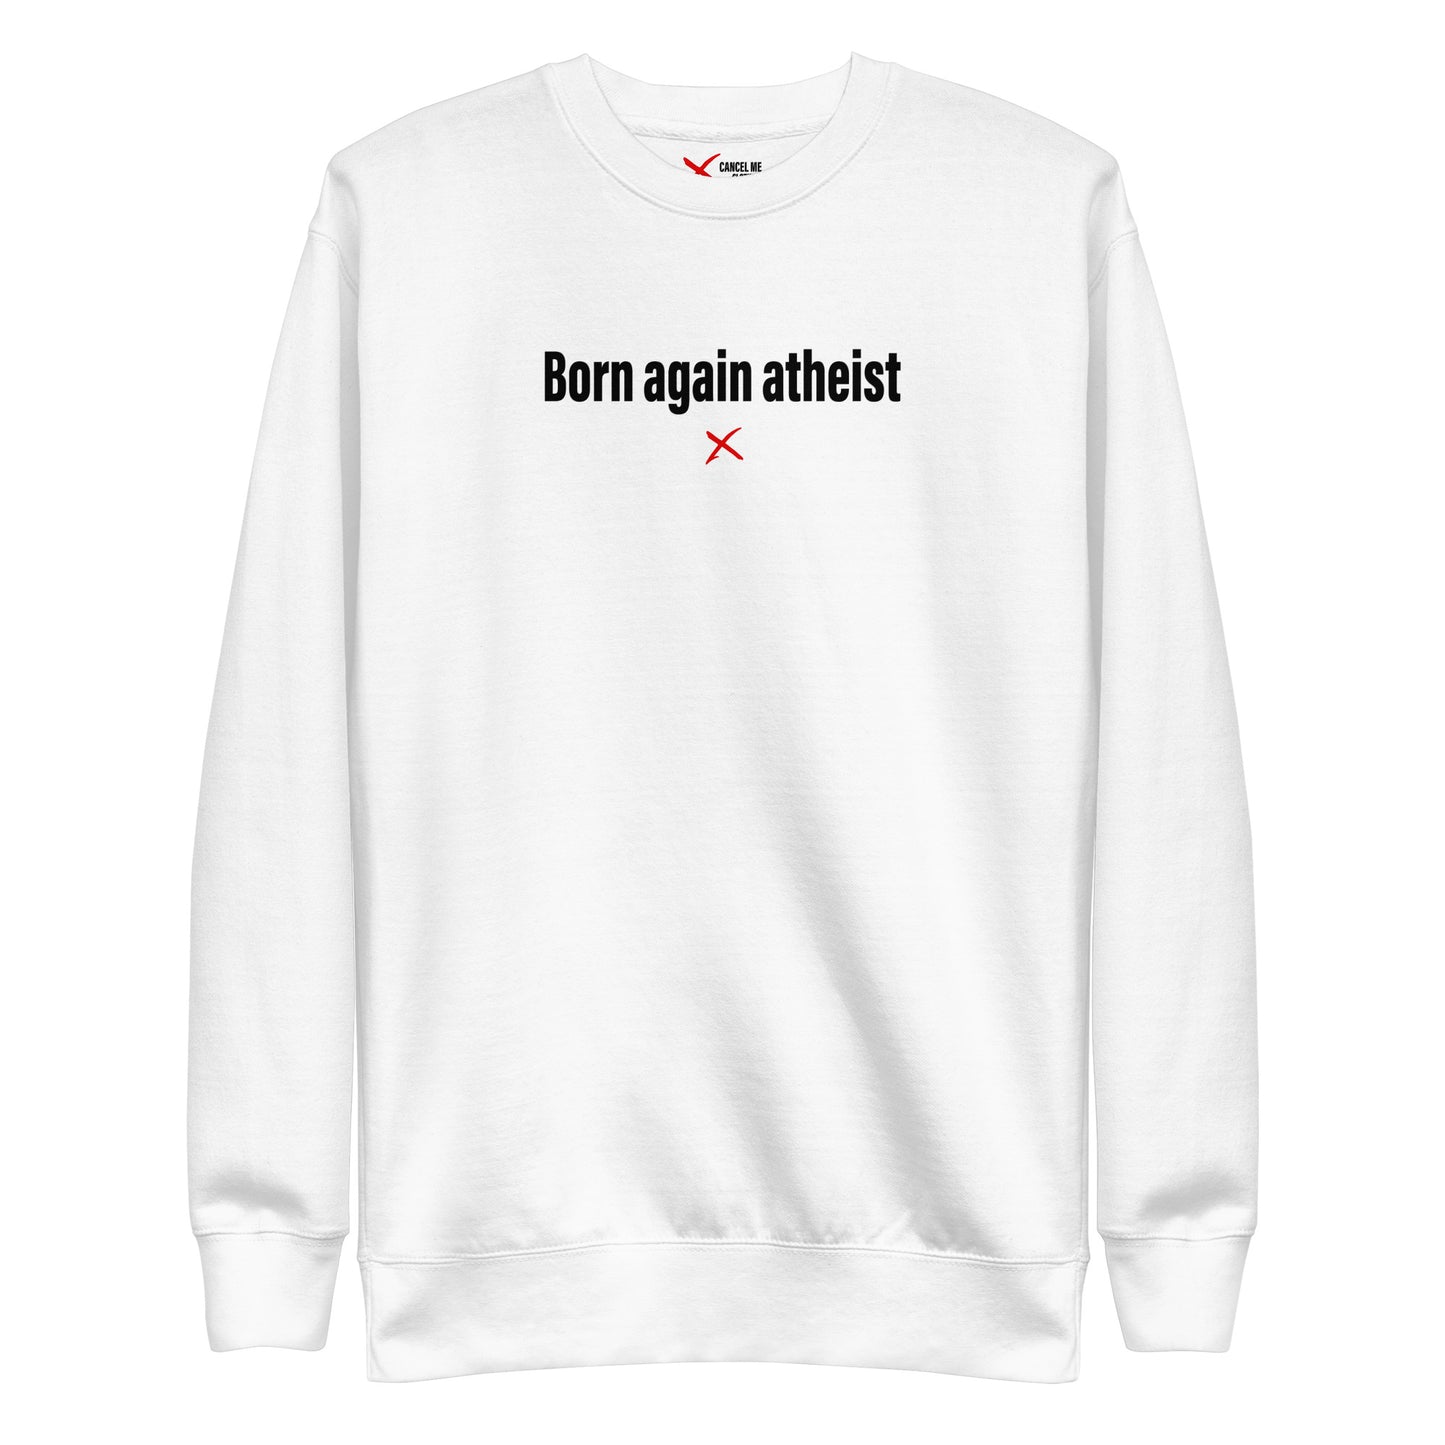 Born again atheist - Sweatshirt